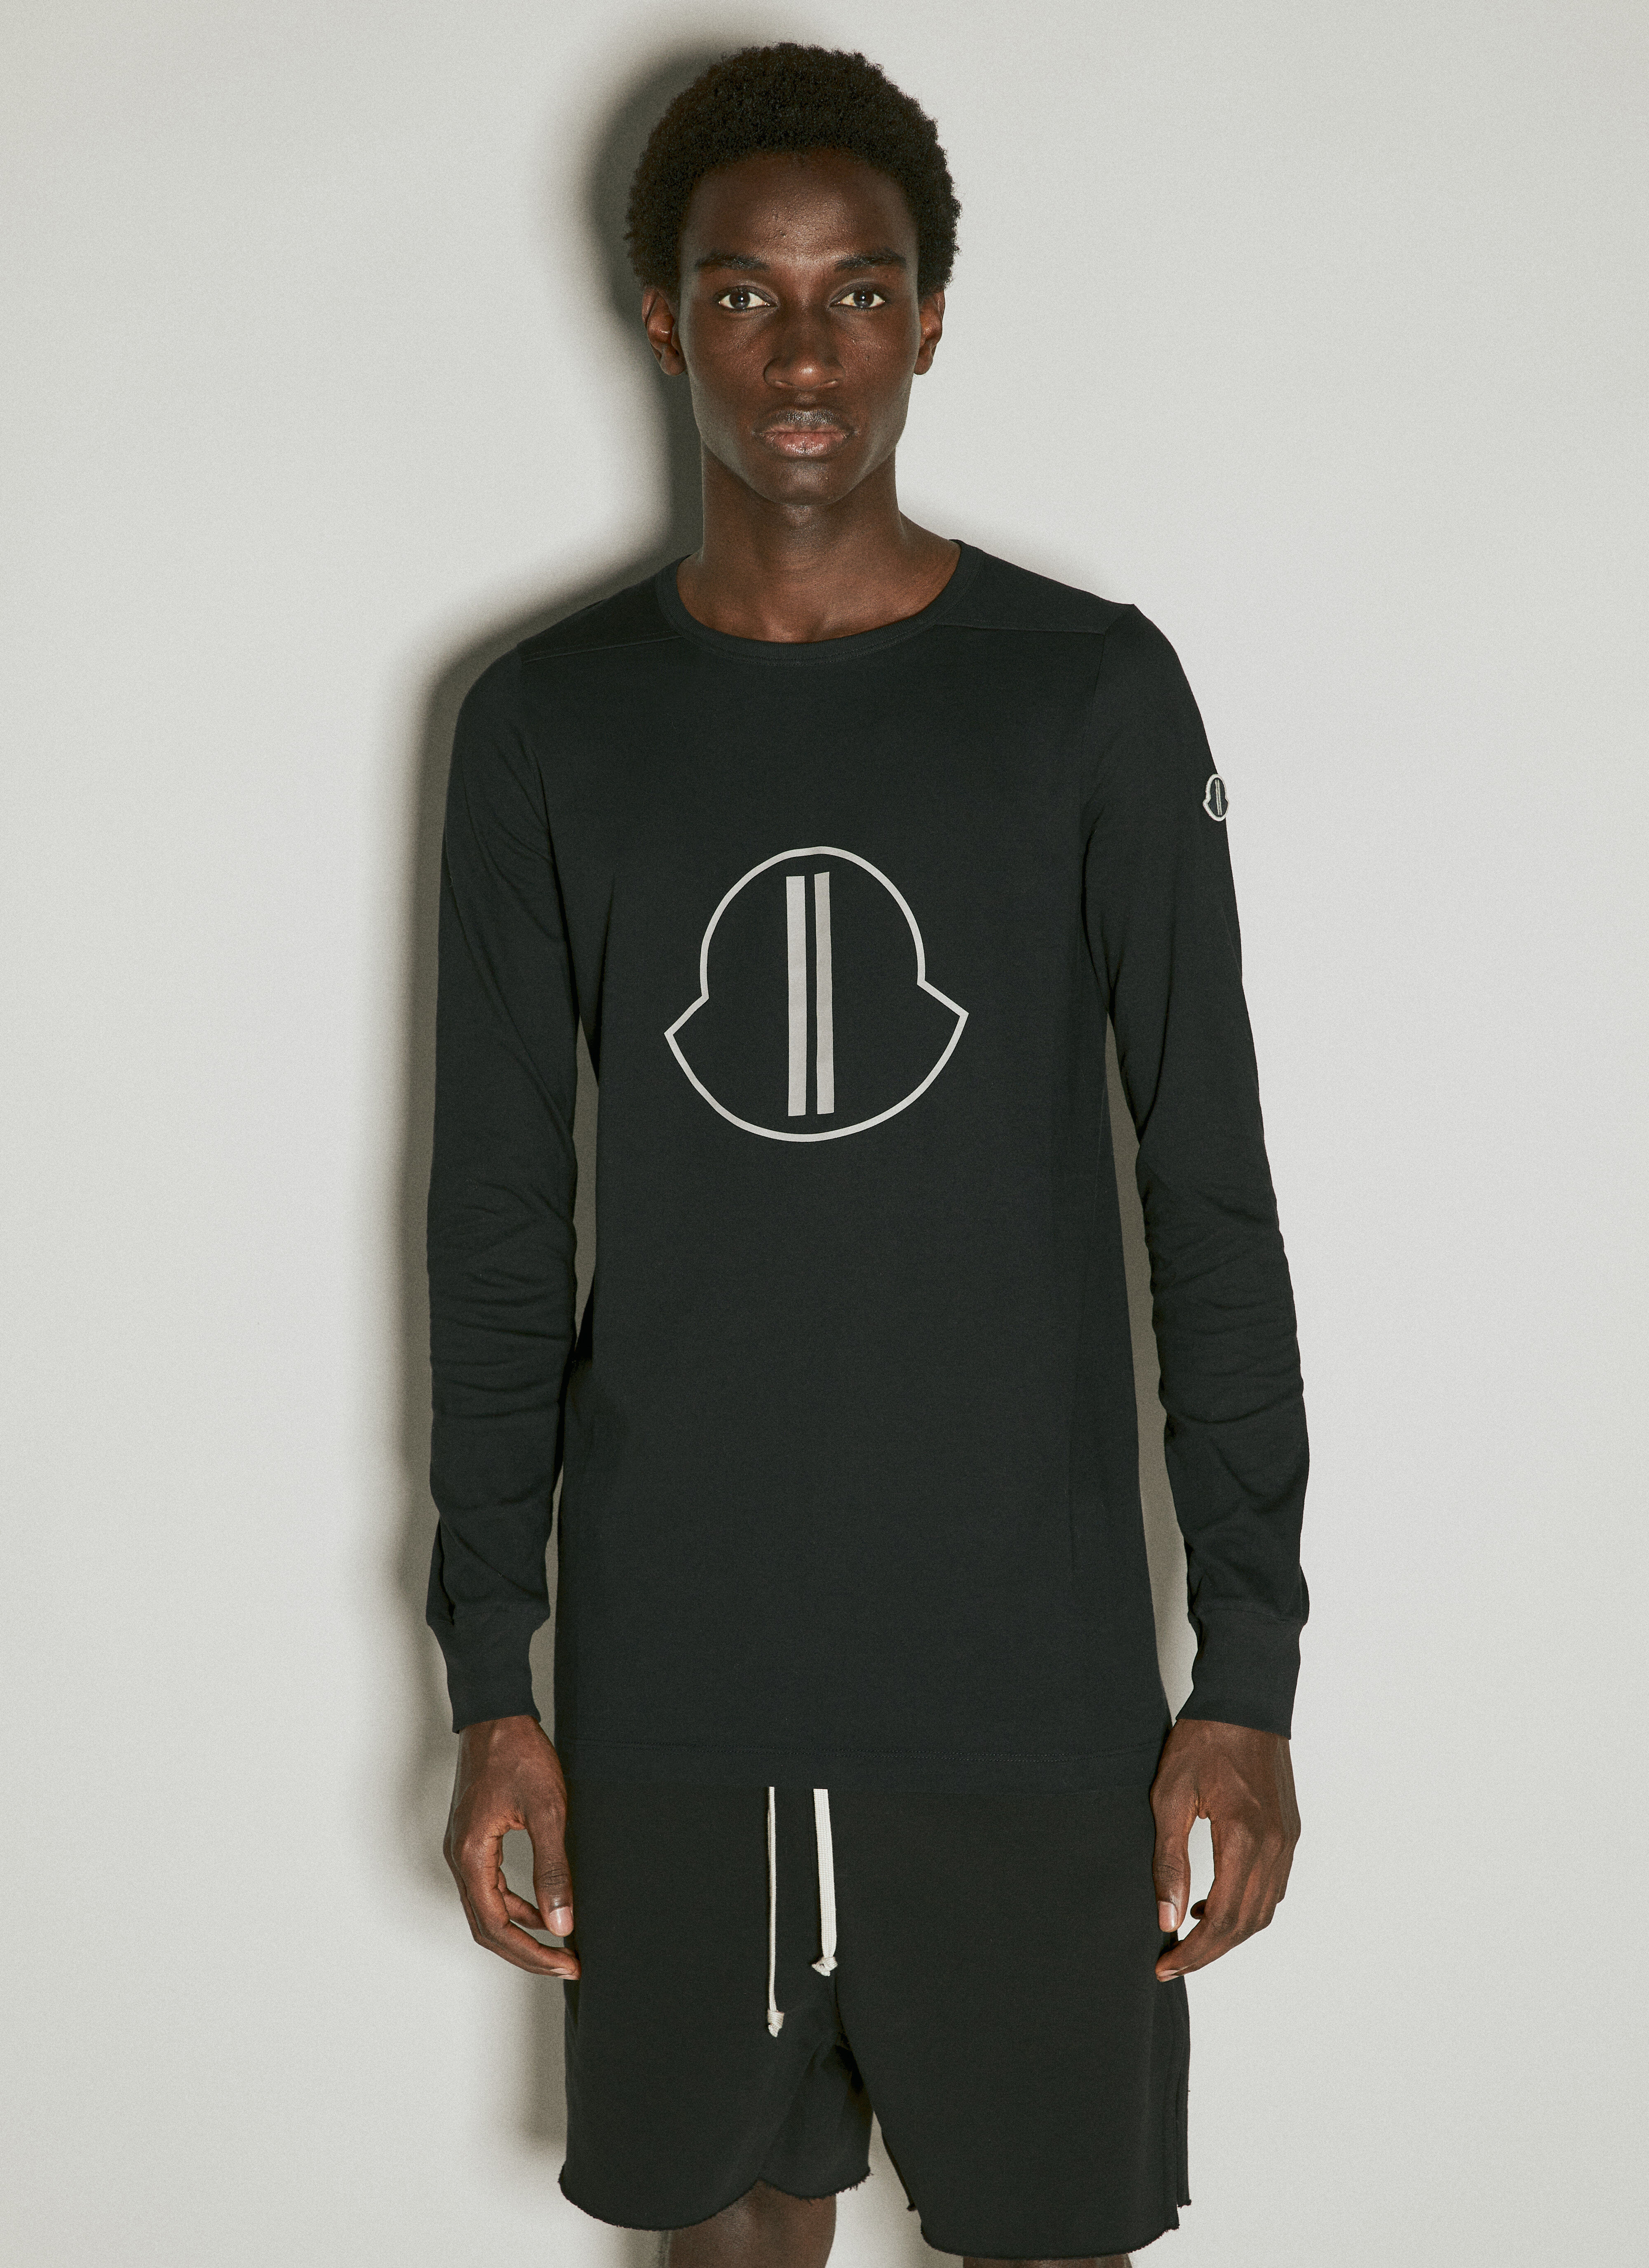 Moncler x Roc Nation designed by Jay-Z 로고 아플리케 긴팔 티셔츠 블랙 mrn0156002